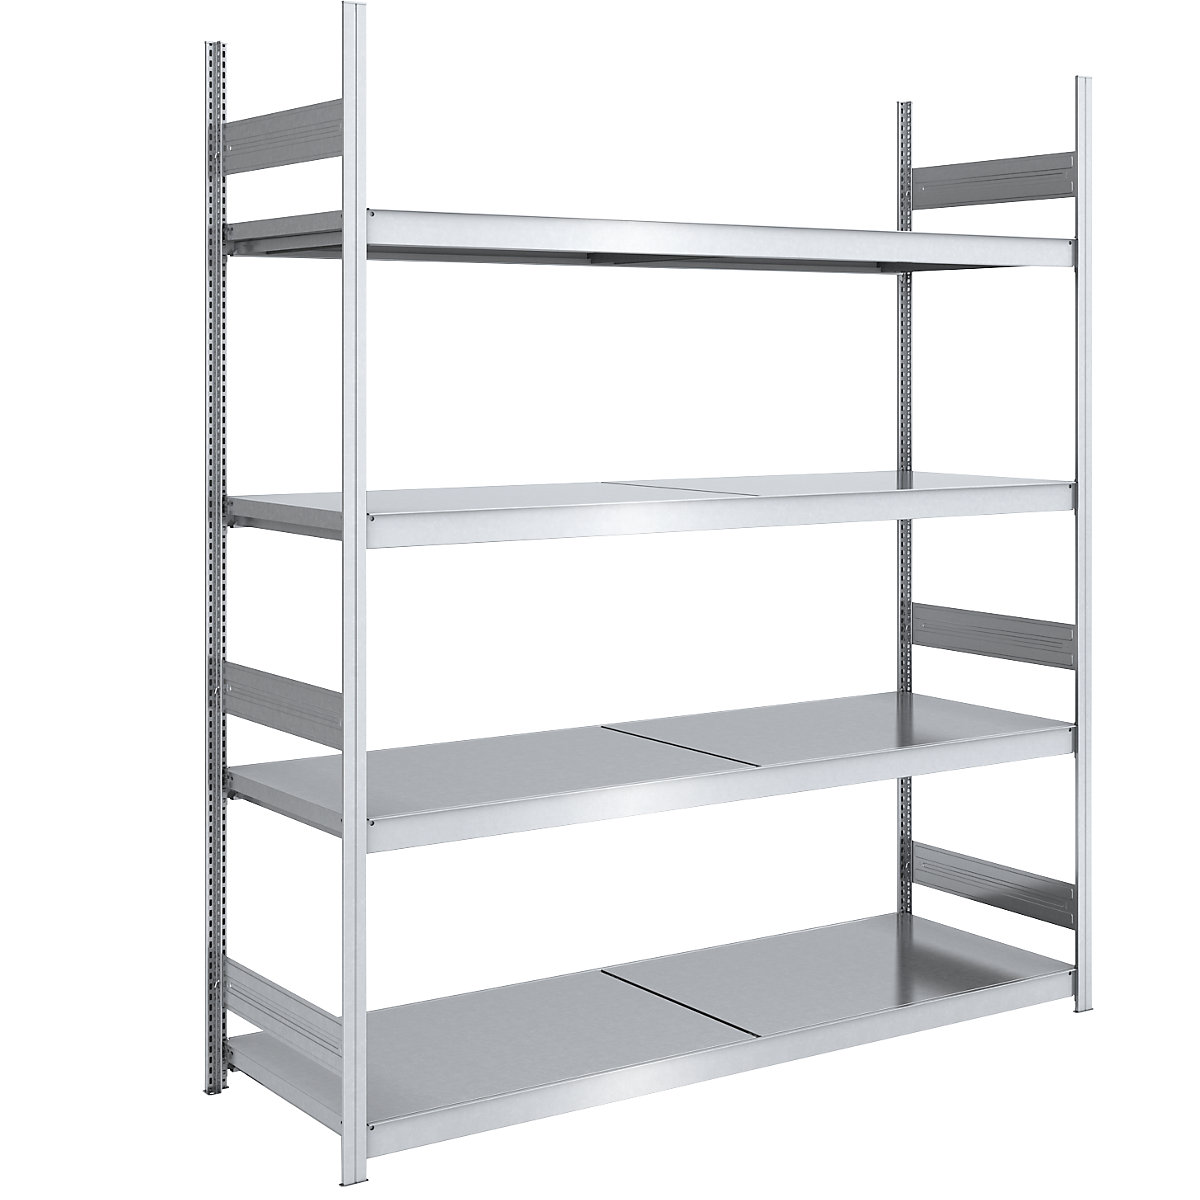 Wide span boltless shelving unit with steel shelves – hofe, height 2500 mm, shelf width 2000 mm, shelf depth 800 mm, standard shelf unit